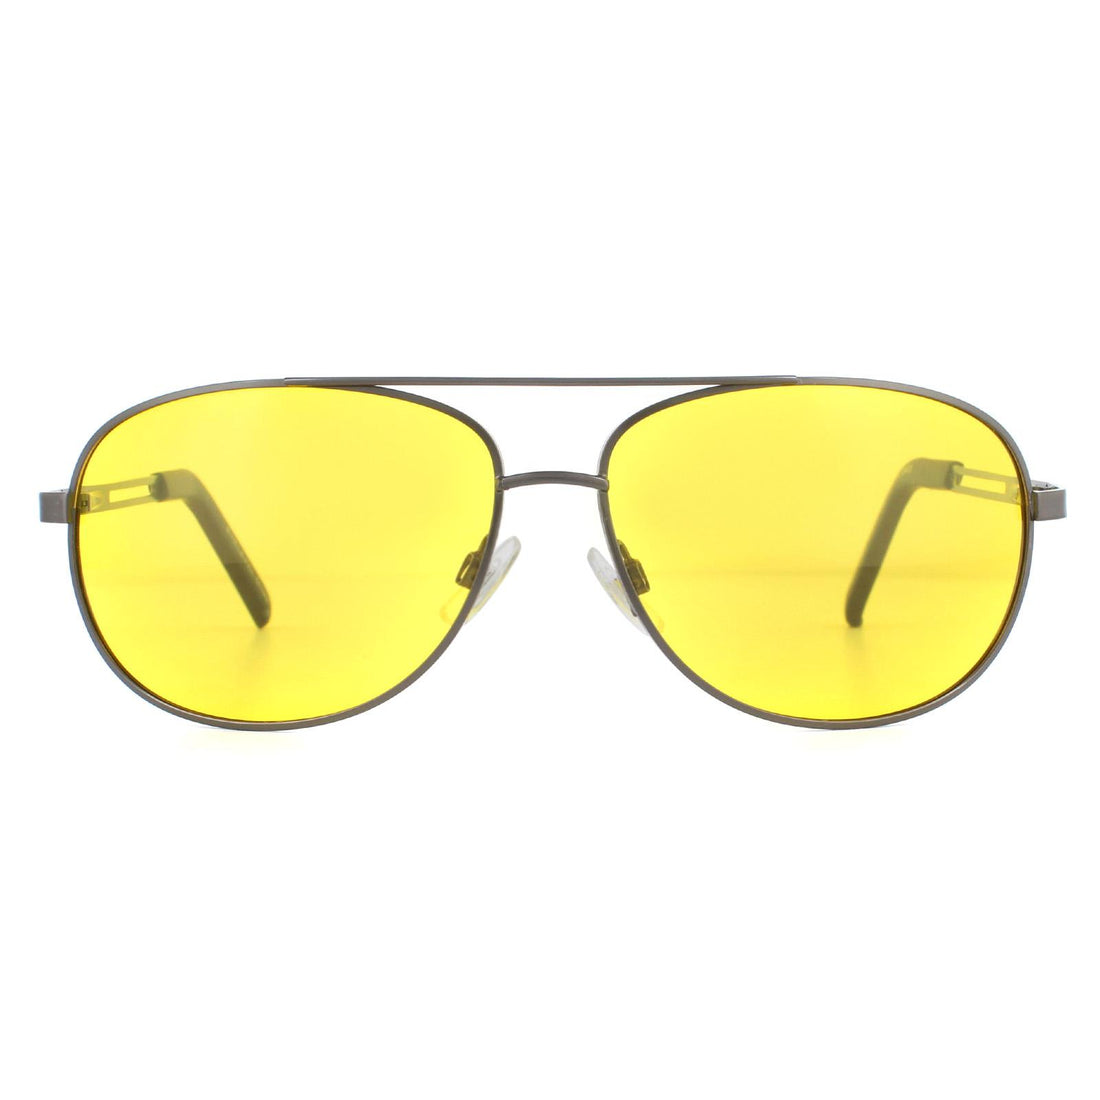 Eyelevel Sunglasses Night Driver Polarized Brown Black Night Vision Glasses